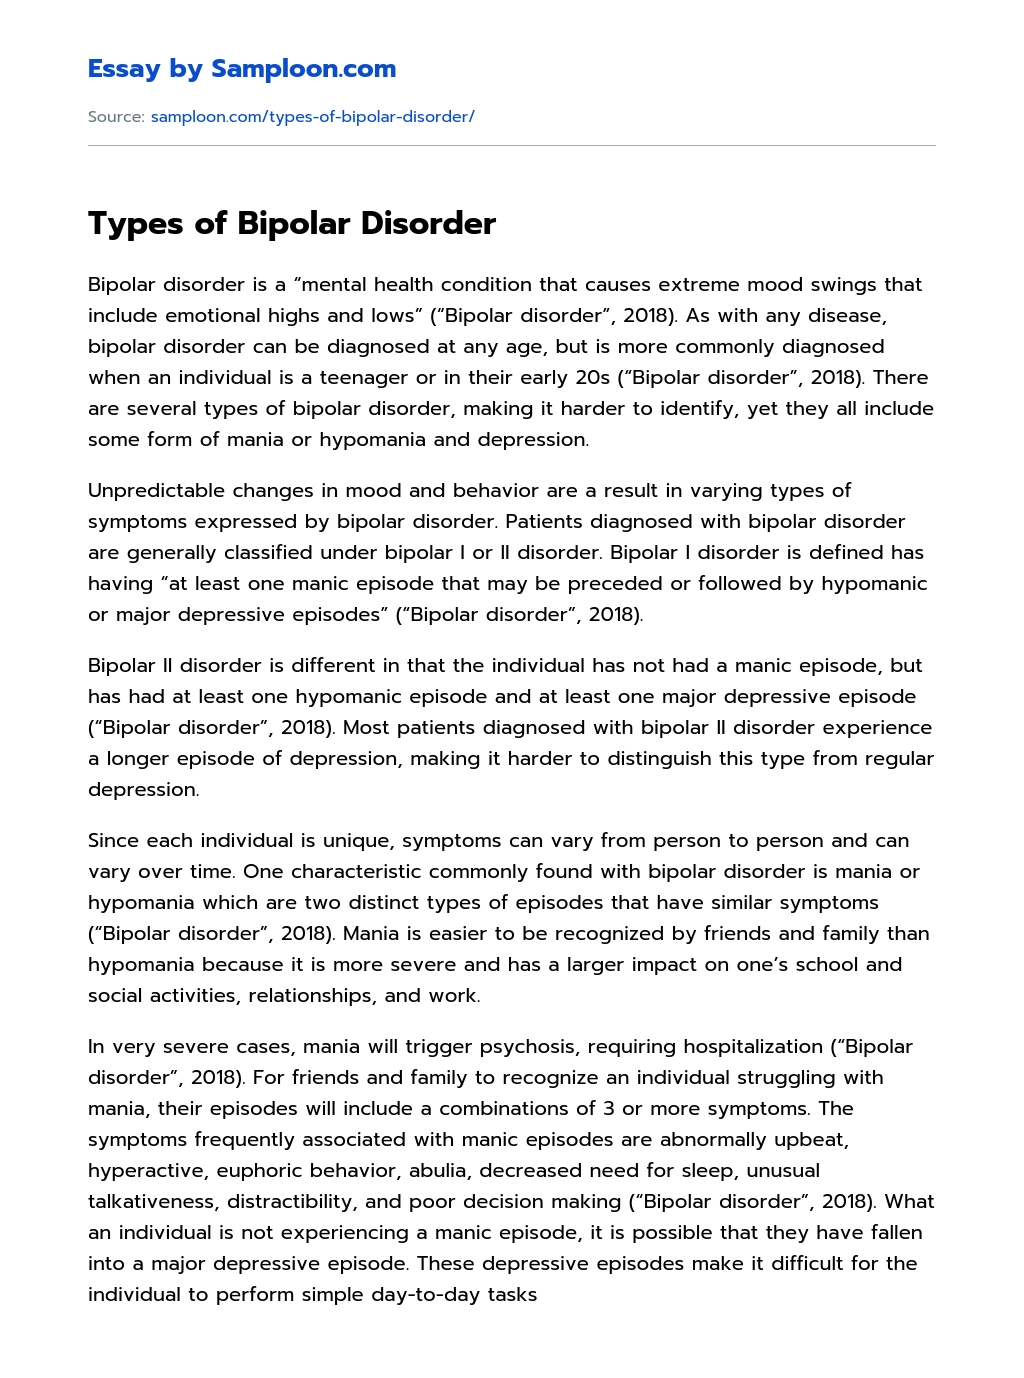 Types of Bipolar Disorder essay